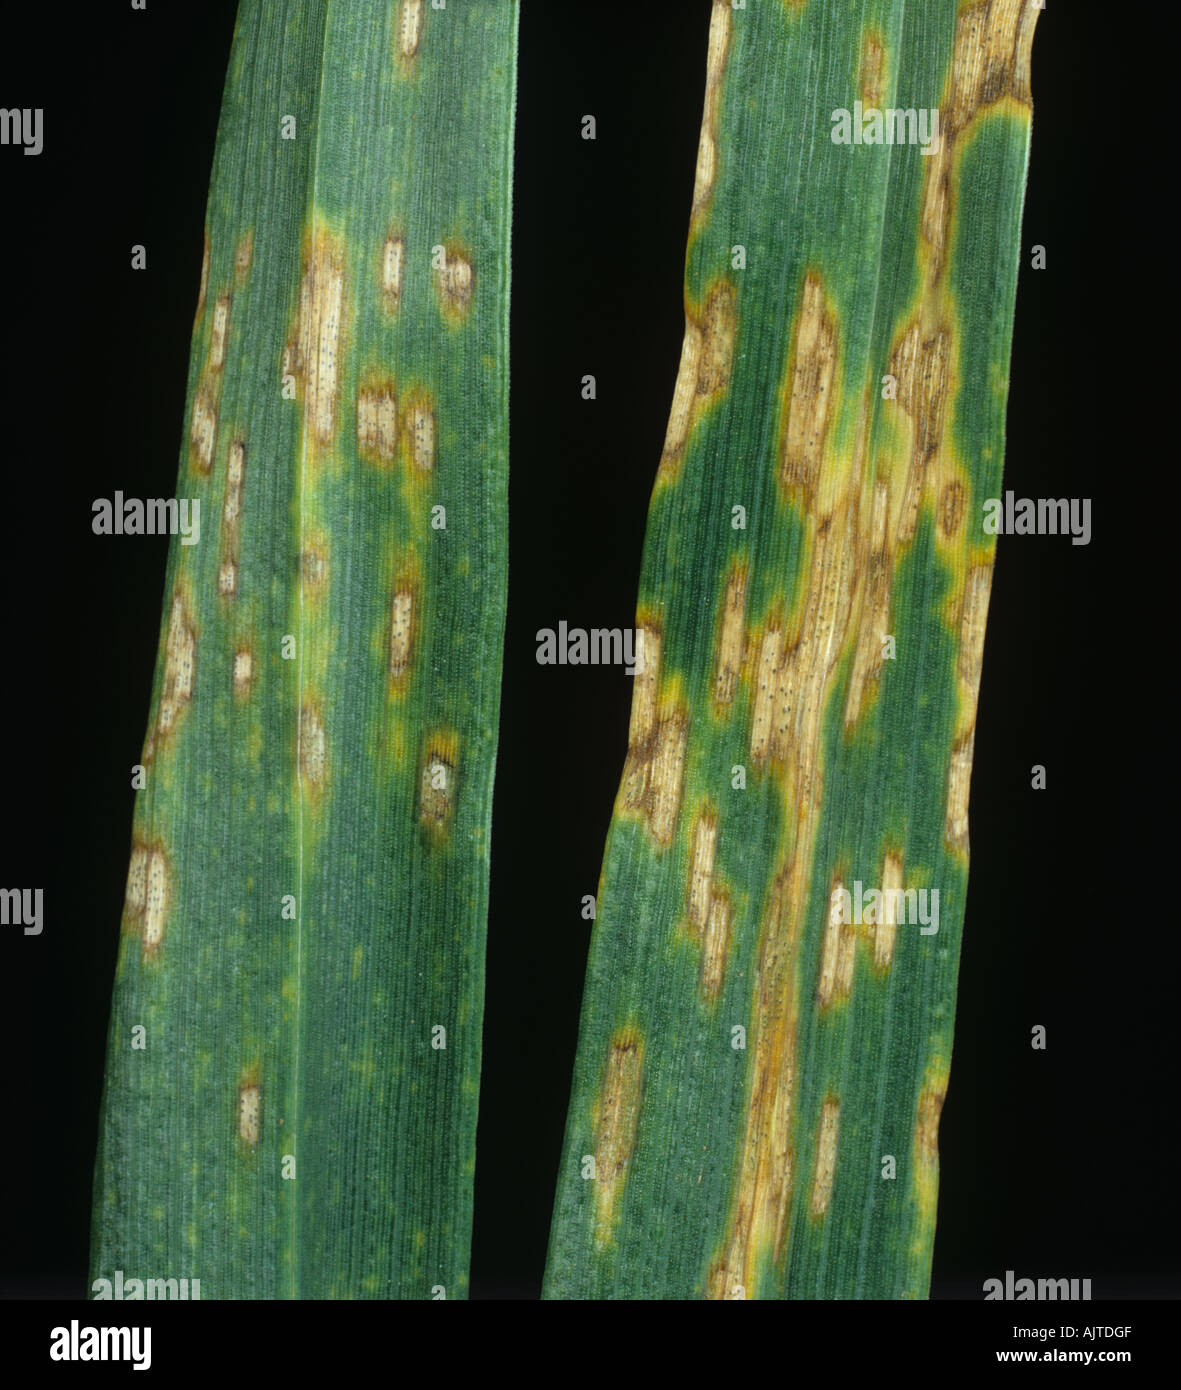 Septoria leaf spot Zymoeptoria tritici lesions on wheat leaves Stock Photo